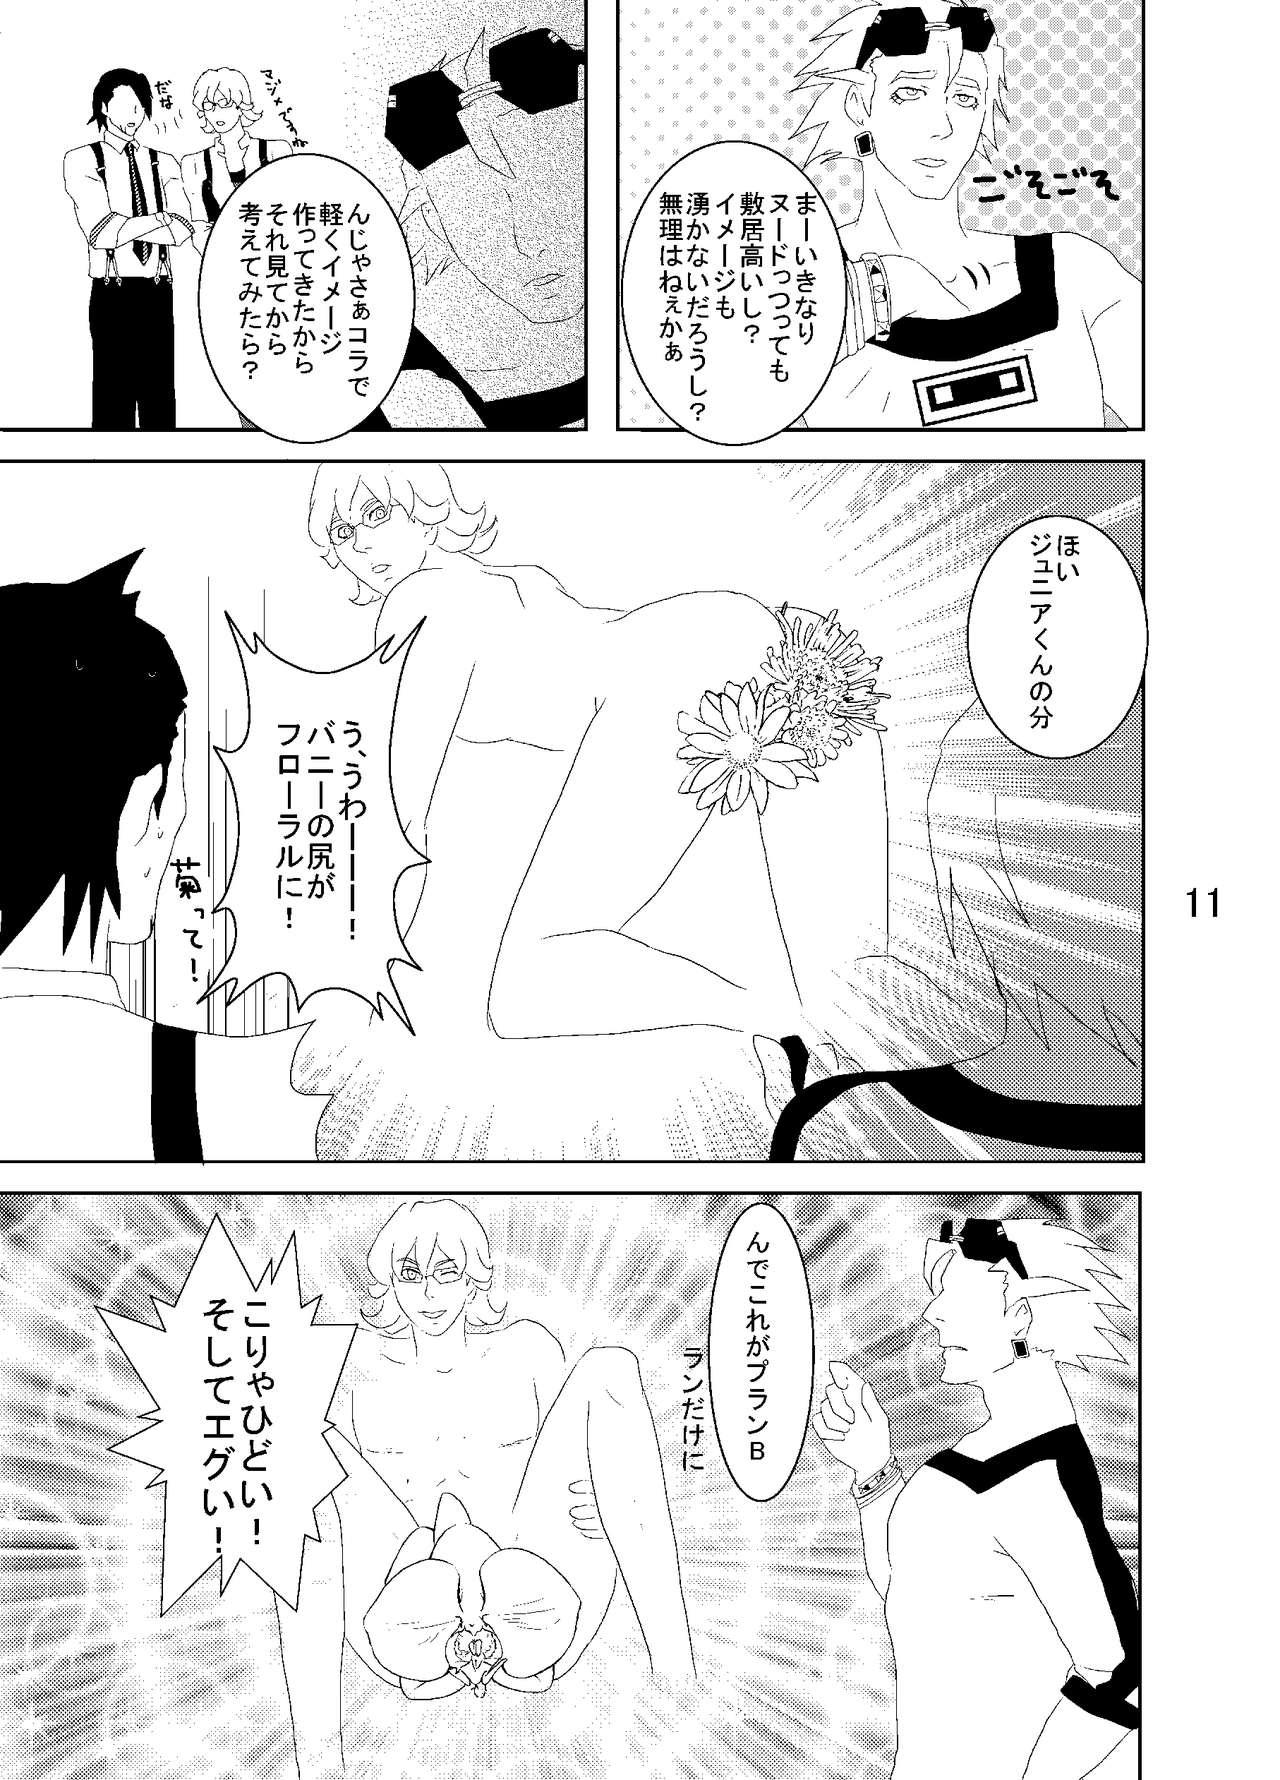 Bondagesex Web Sairoku Tora Umoto Sono 2 - Tiger and bunny Homosexual - Page 11